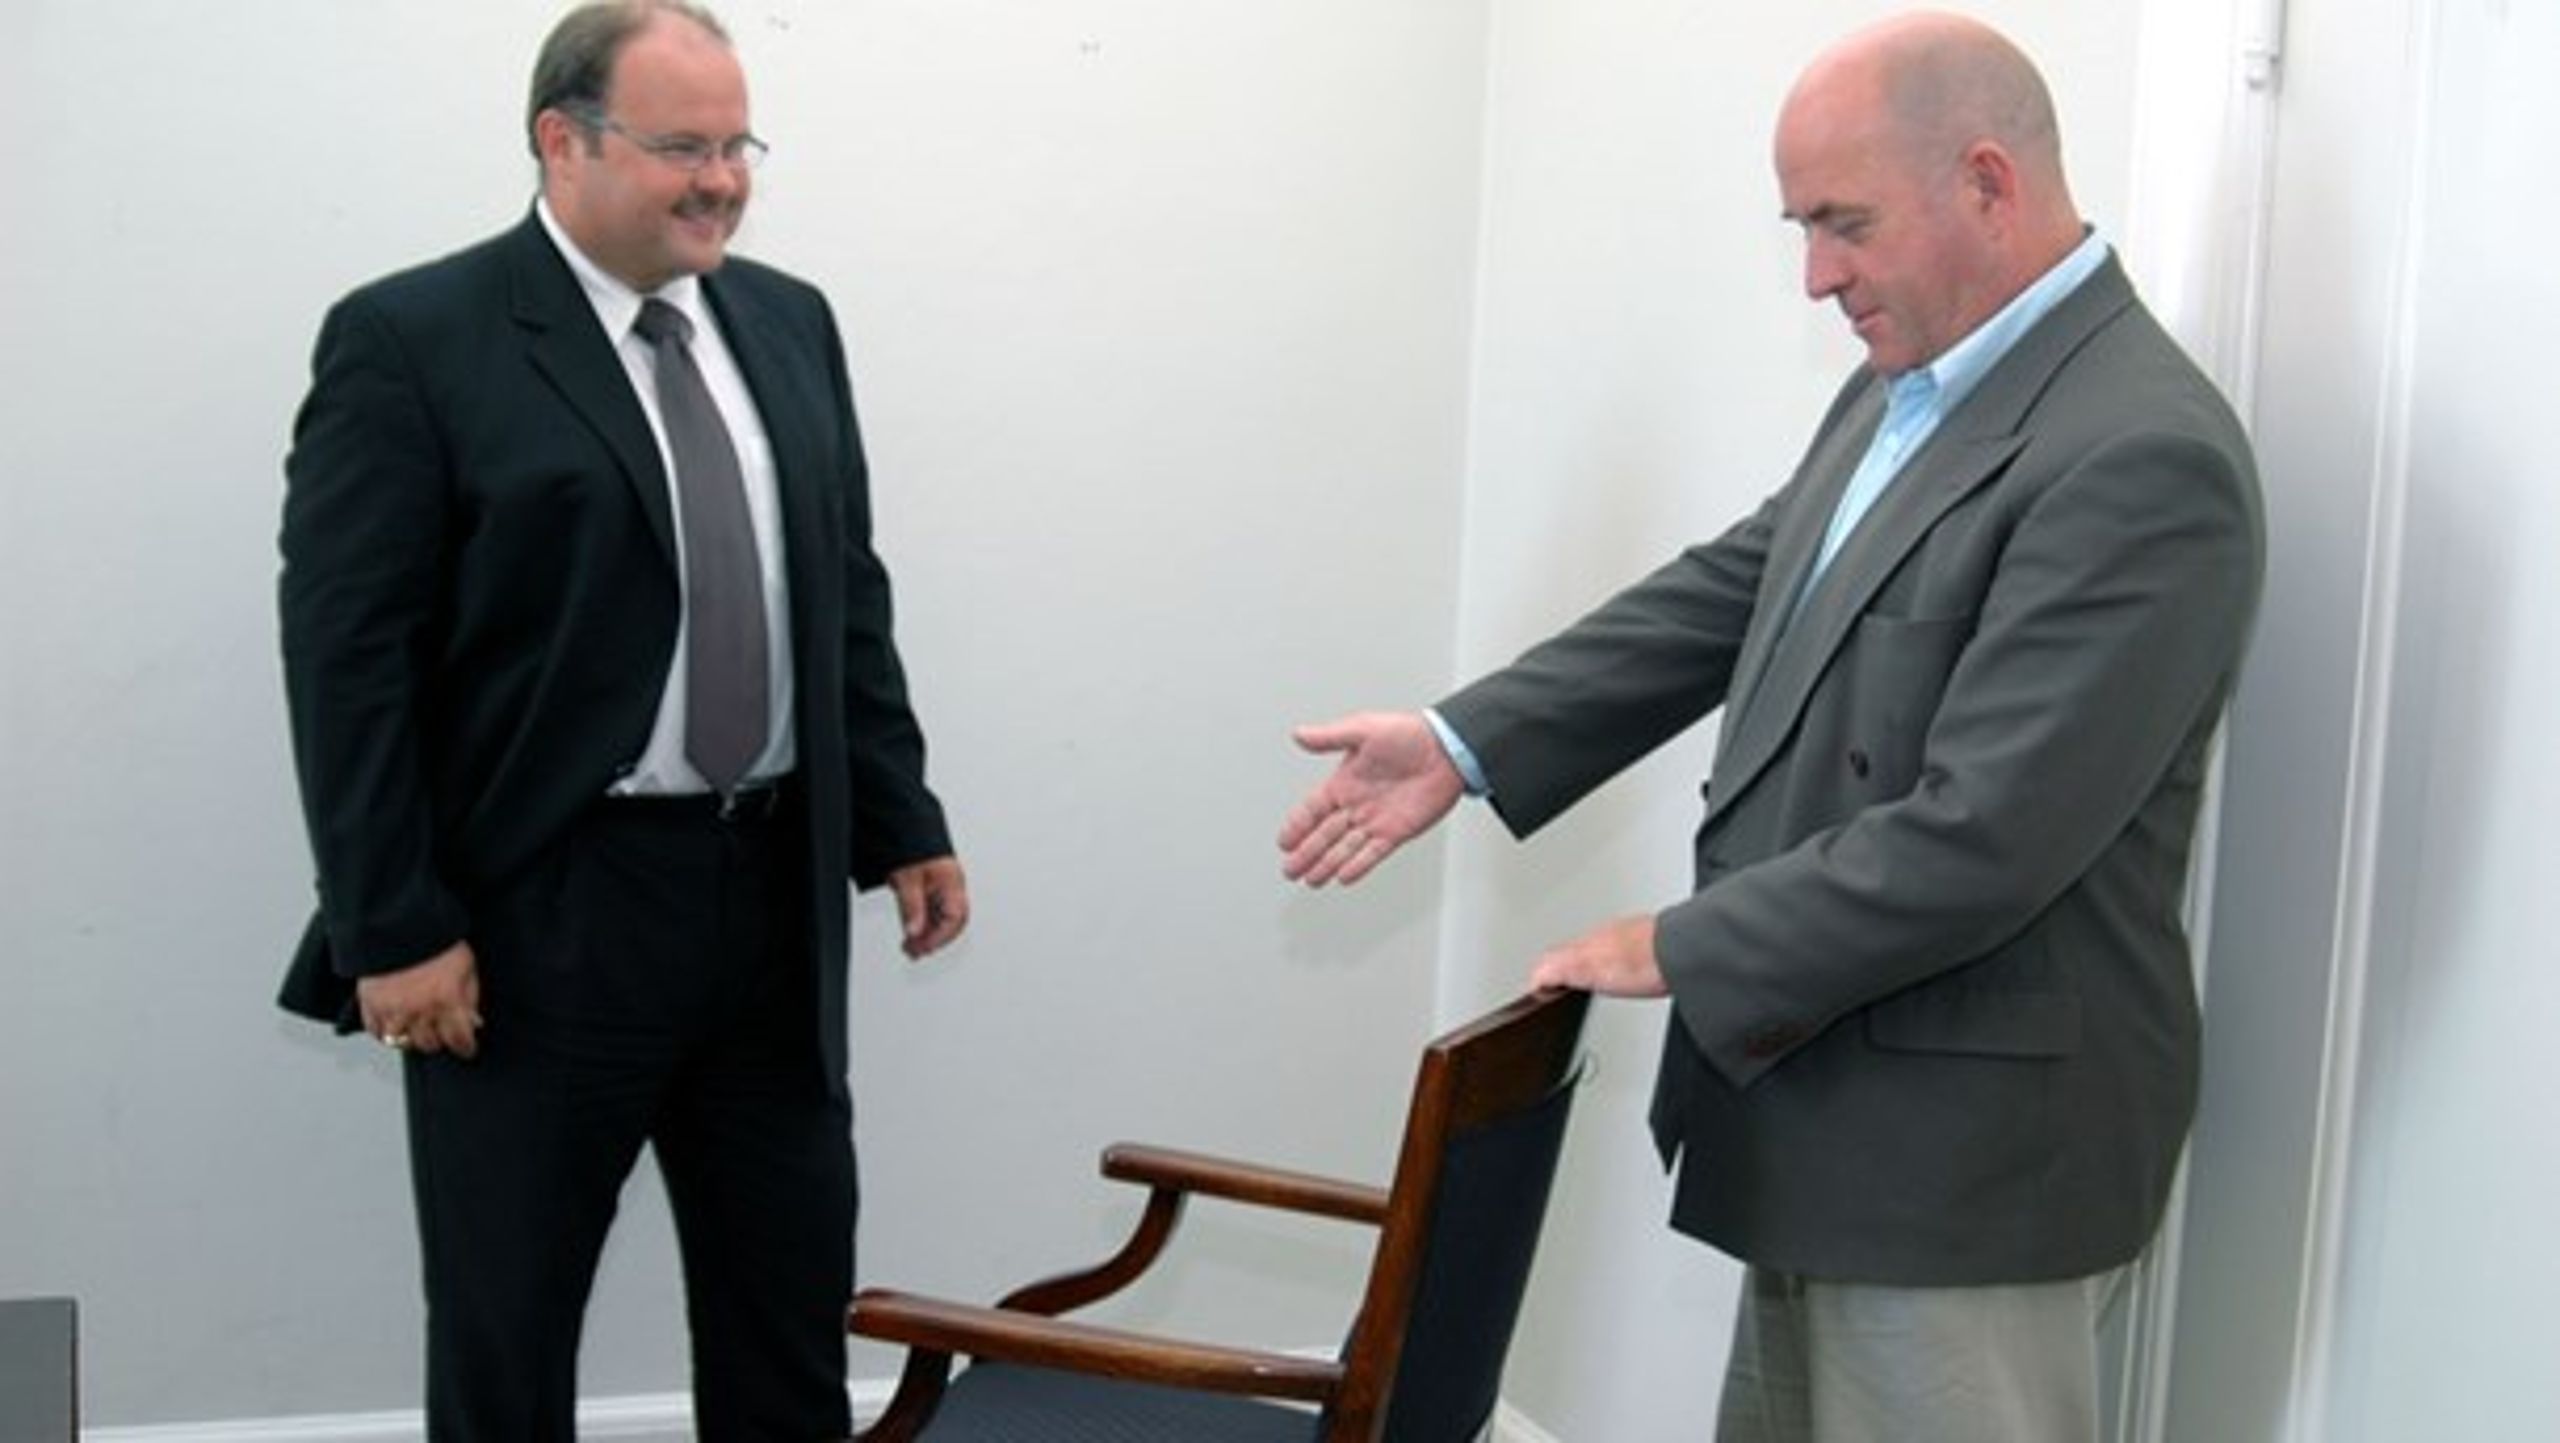 –&nbsp;Værsgo, stolen er din, sagde den ene Søren til den anden i 2005.